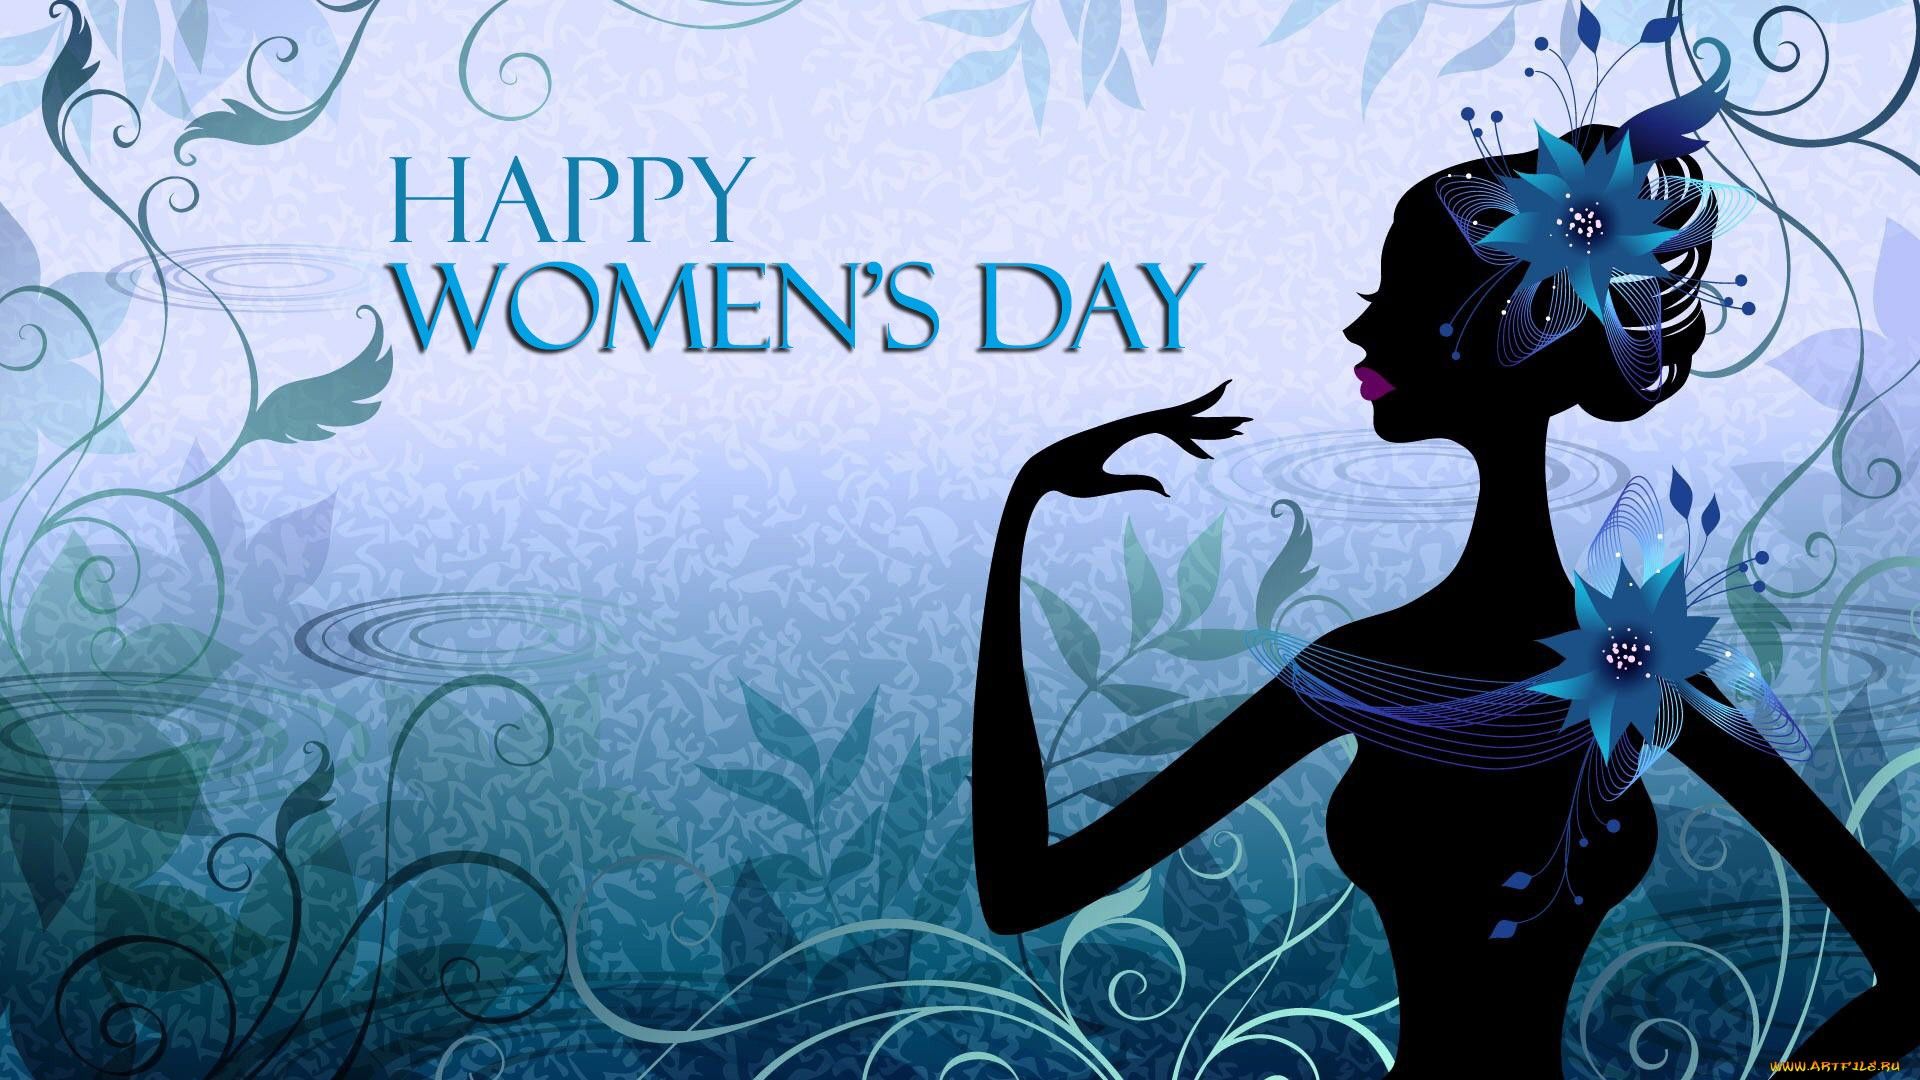 International Women's Day Image .wallpaperboat.com